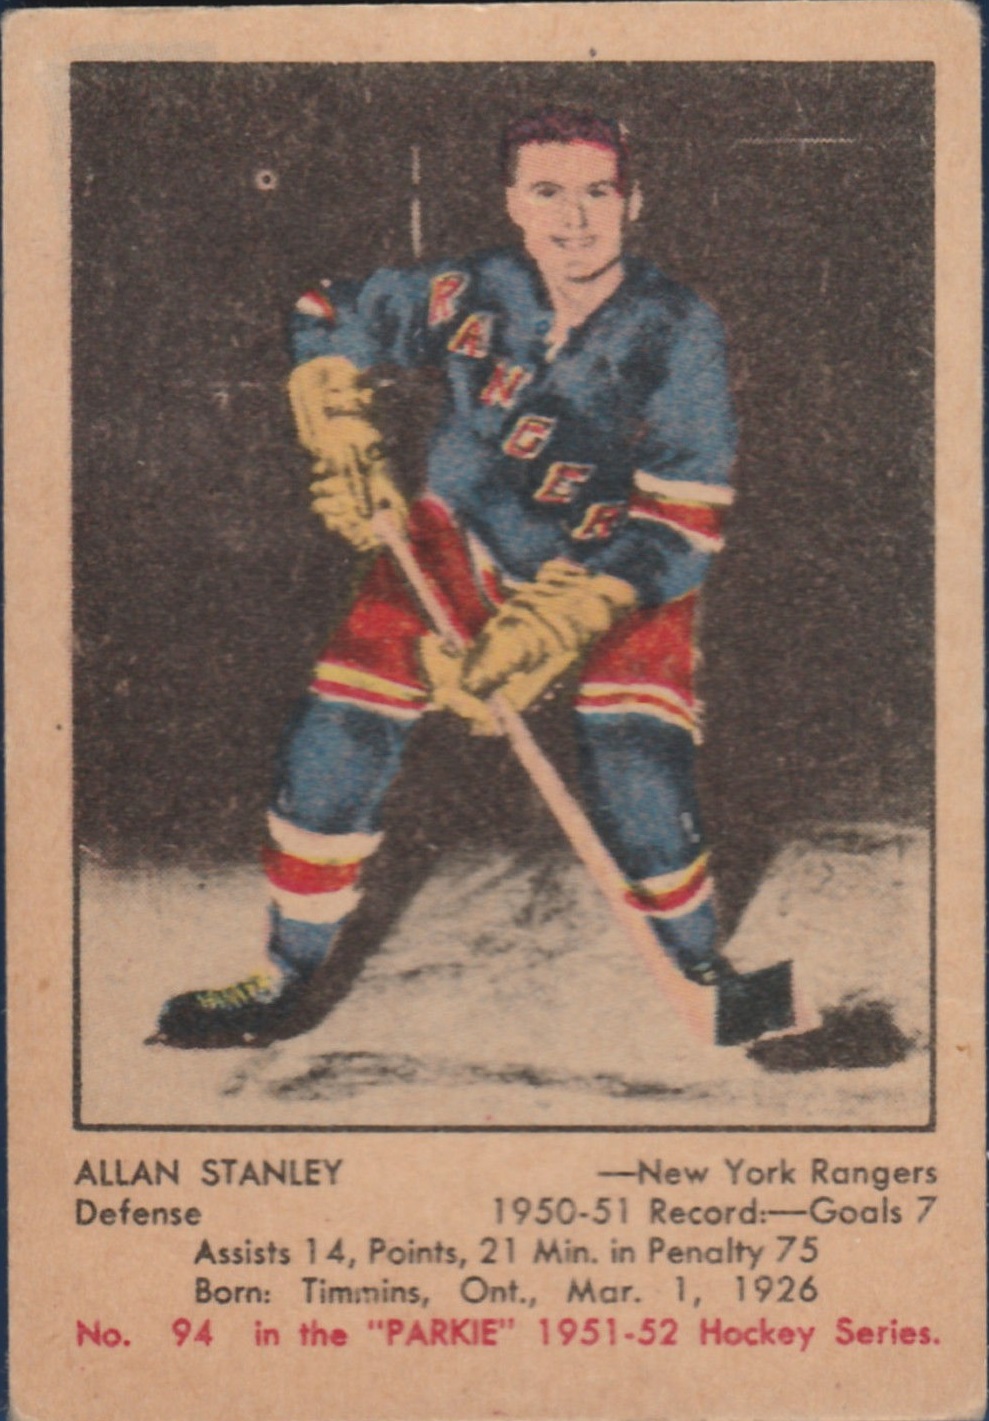  Allan Stanley player image